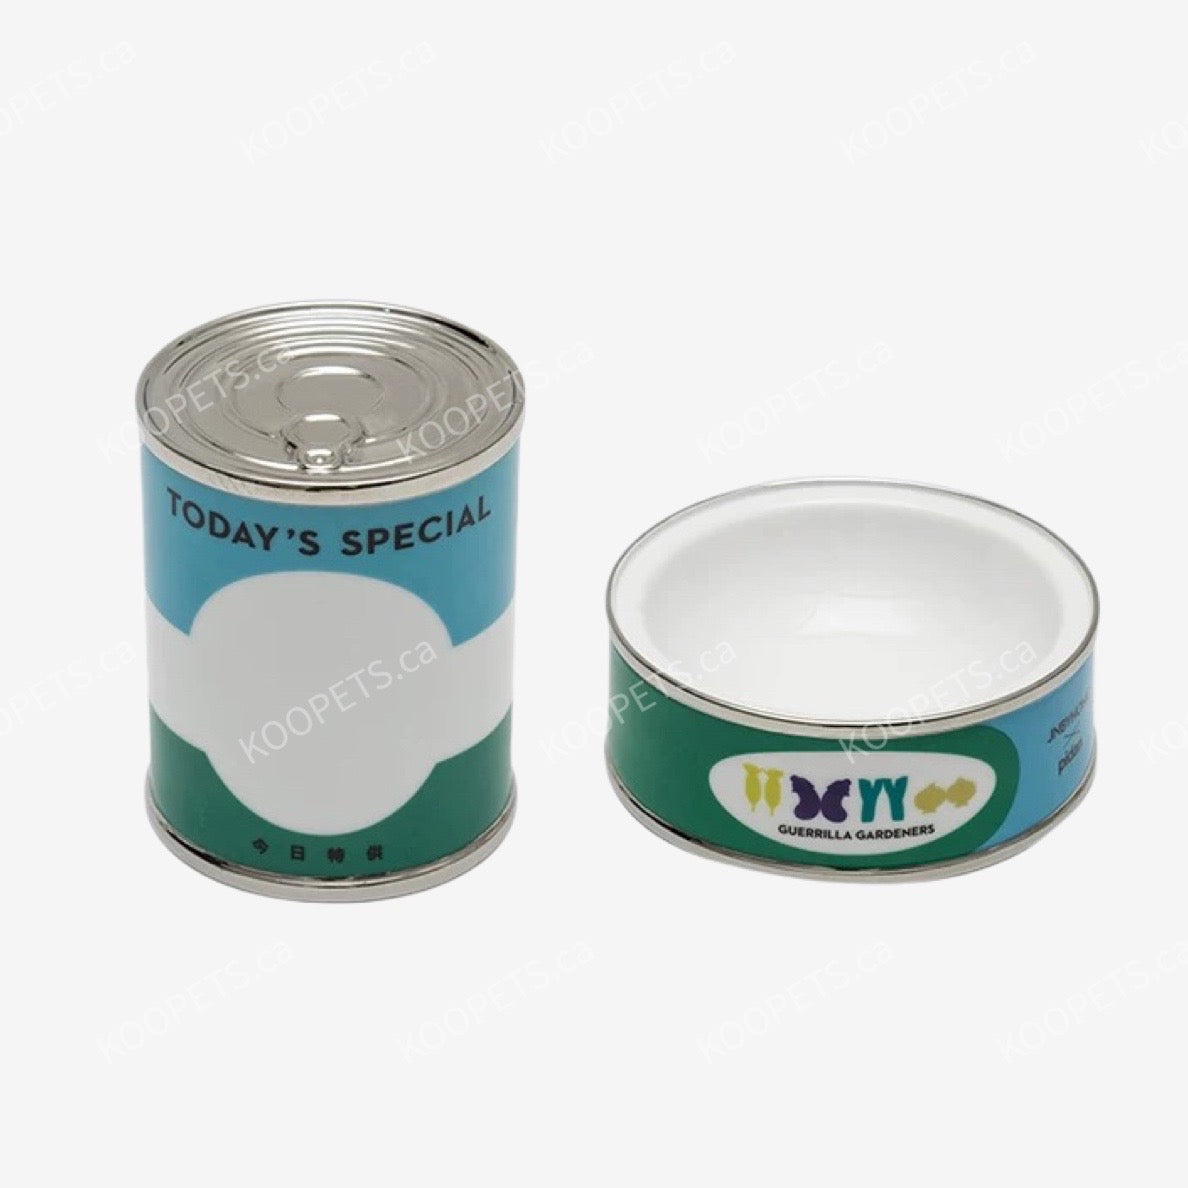 JNBYHOME | Ceramic Mug + Pet Bowl